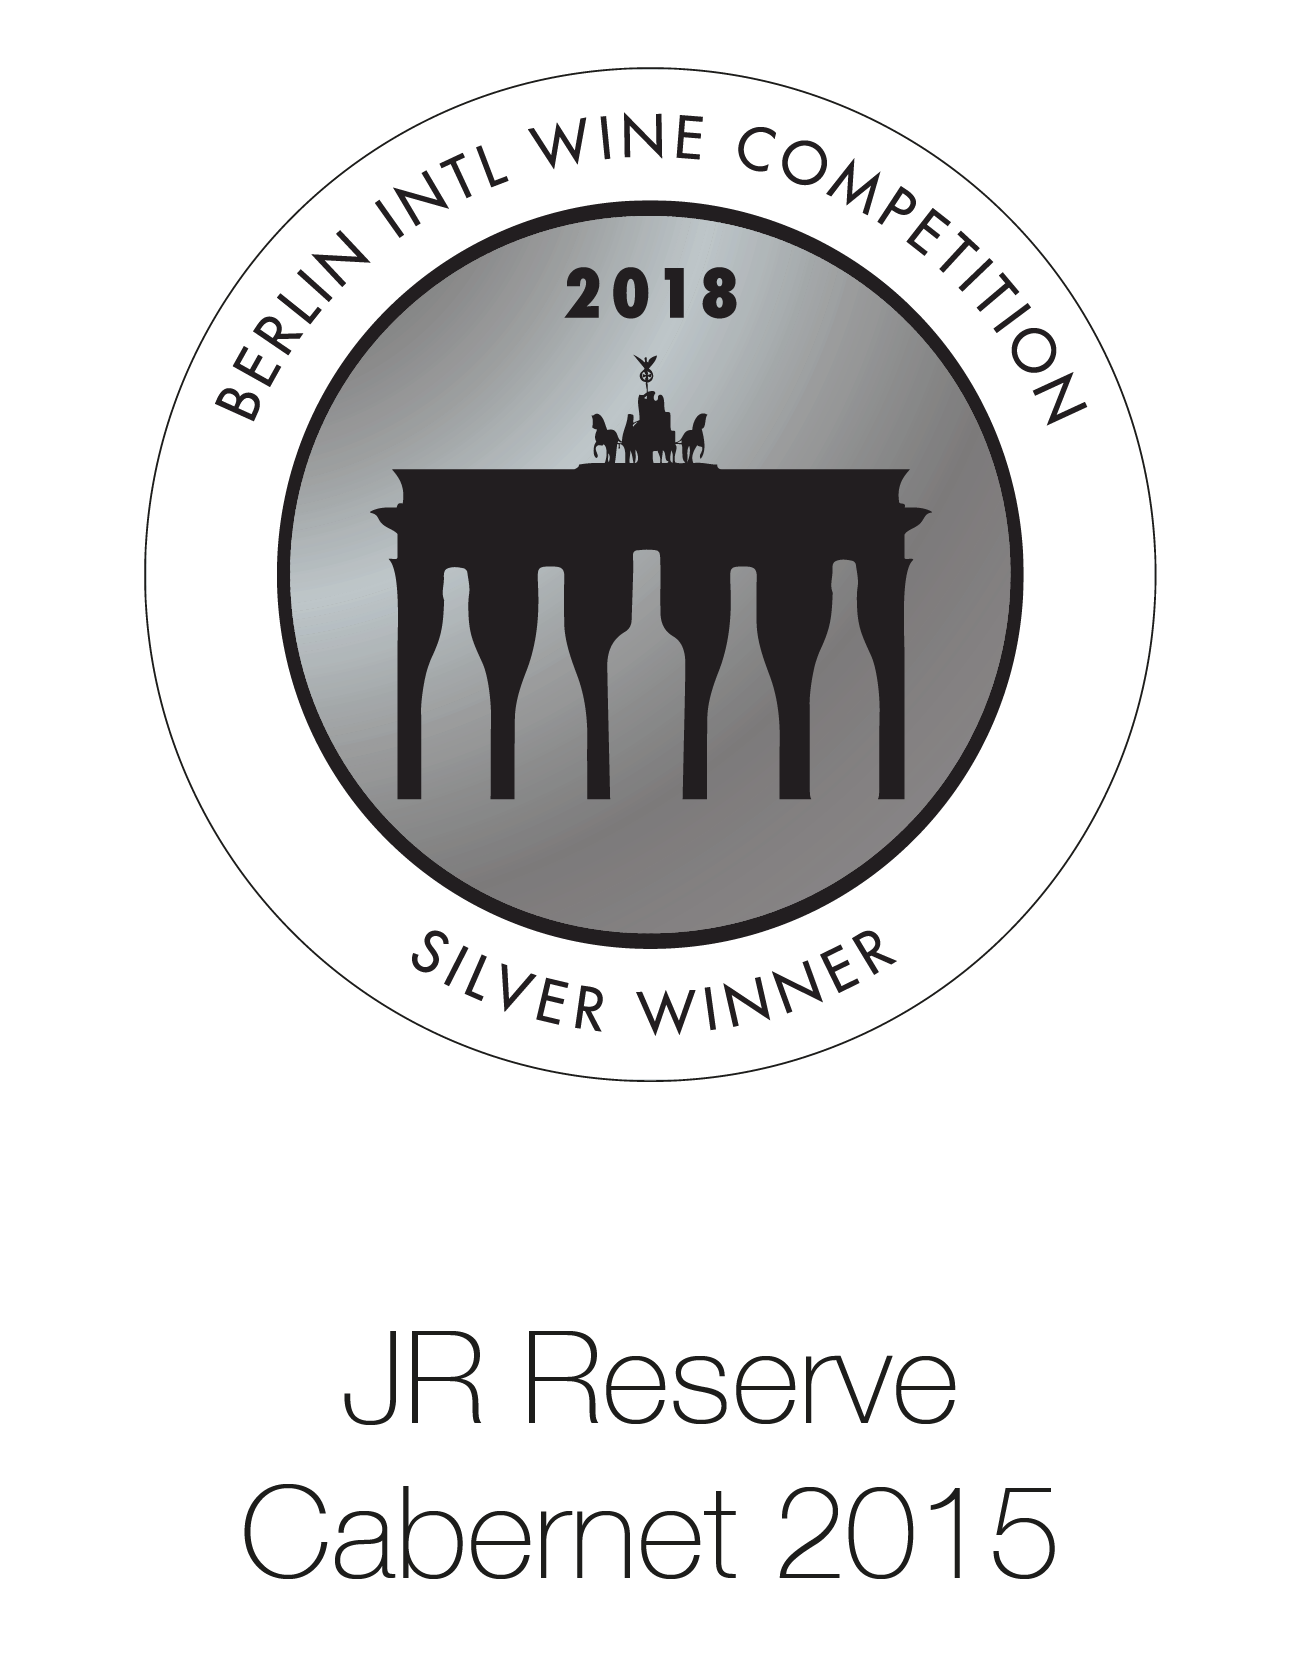 JR Reserve - Cabernet Sauvignon 2015 - Berlin International Wine Competition 2018